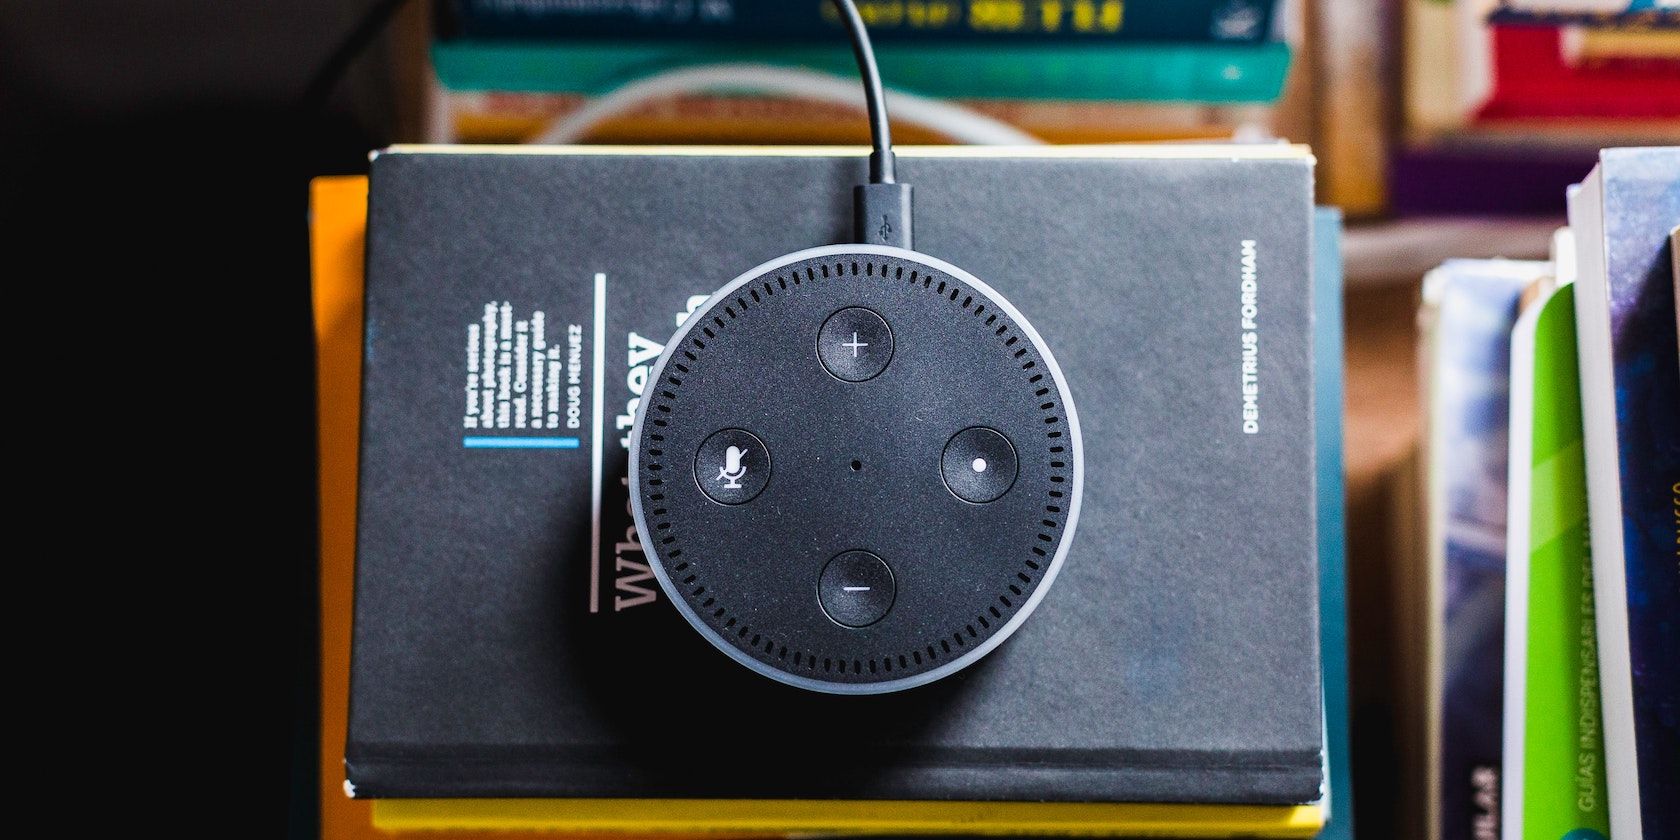 Do You Need an Amazon Account to Use Alexa?